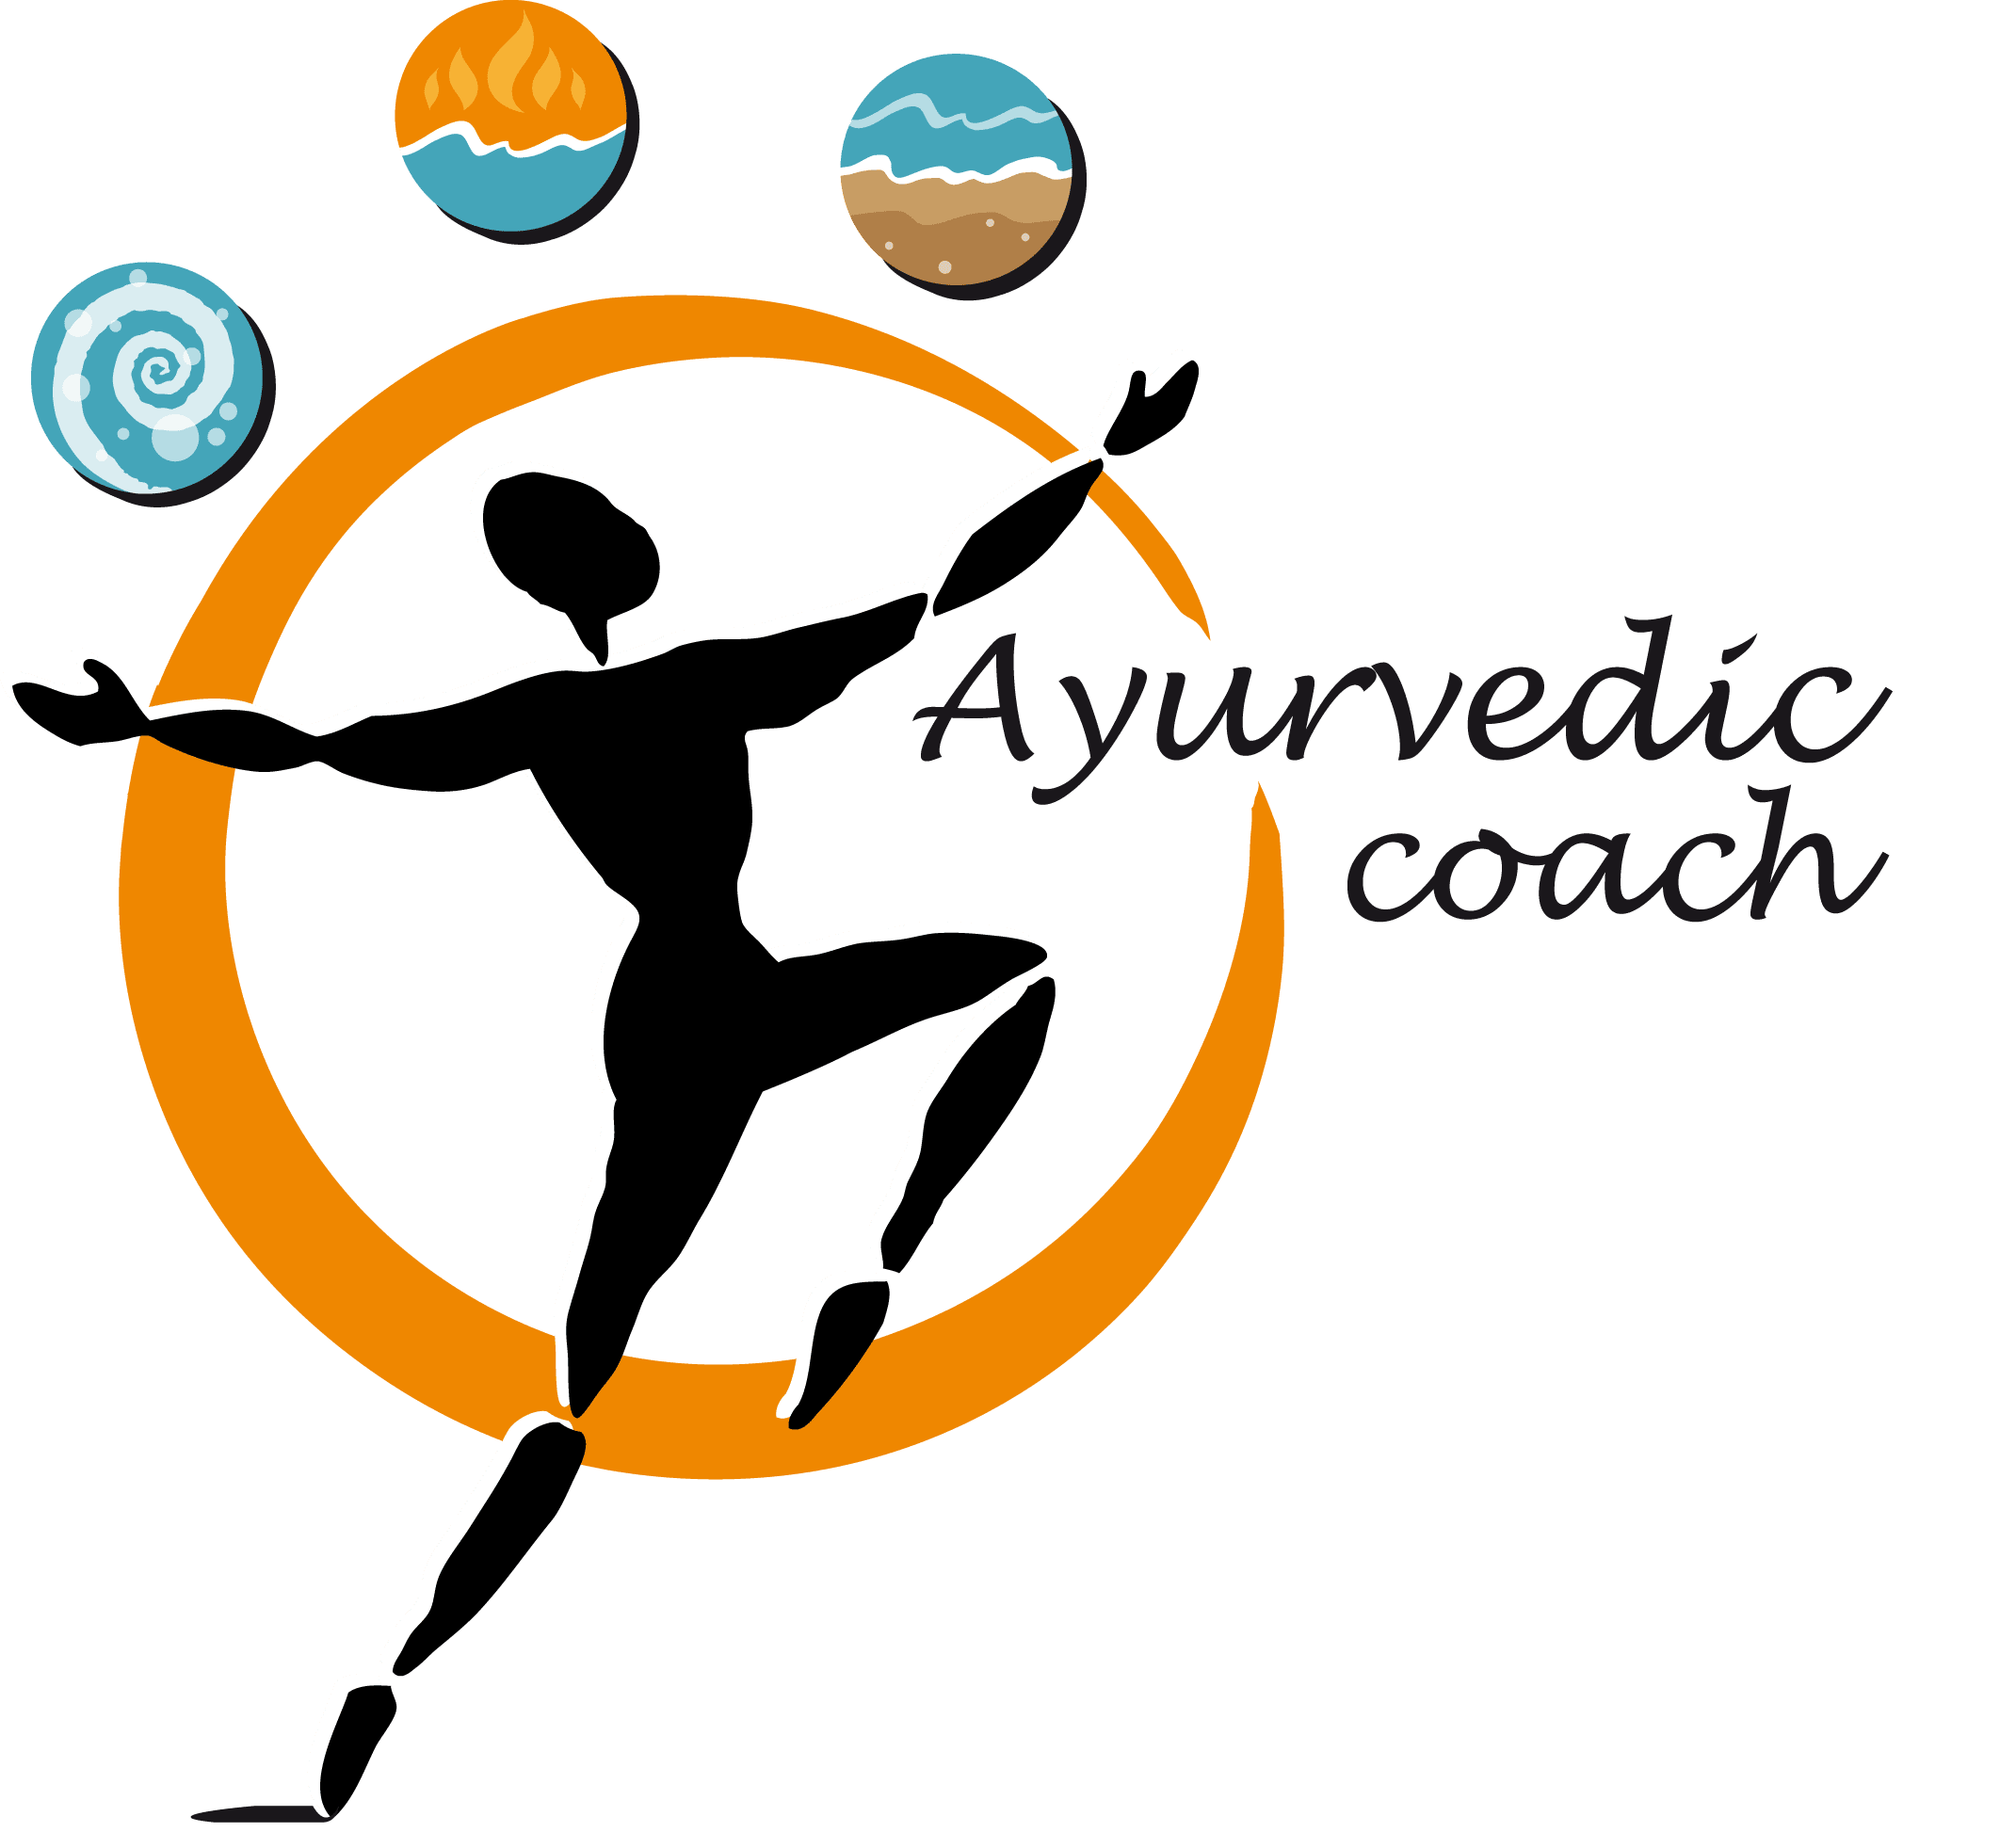 Ayurvedic Coach